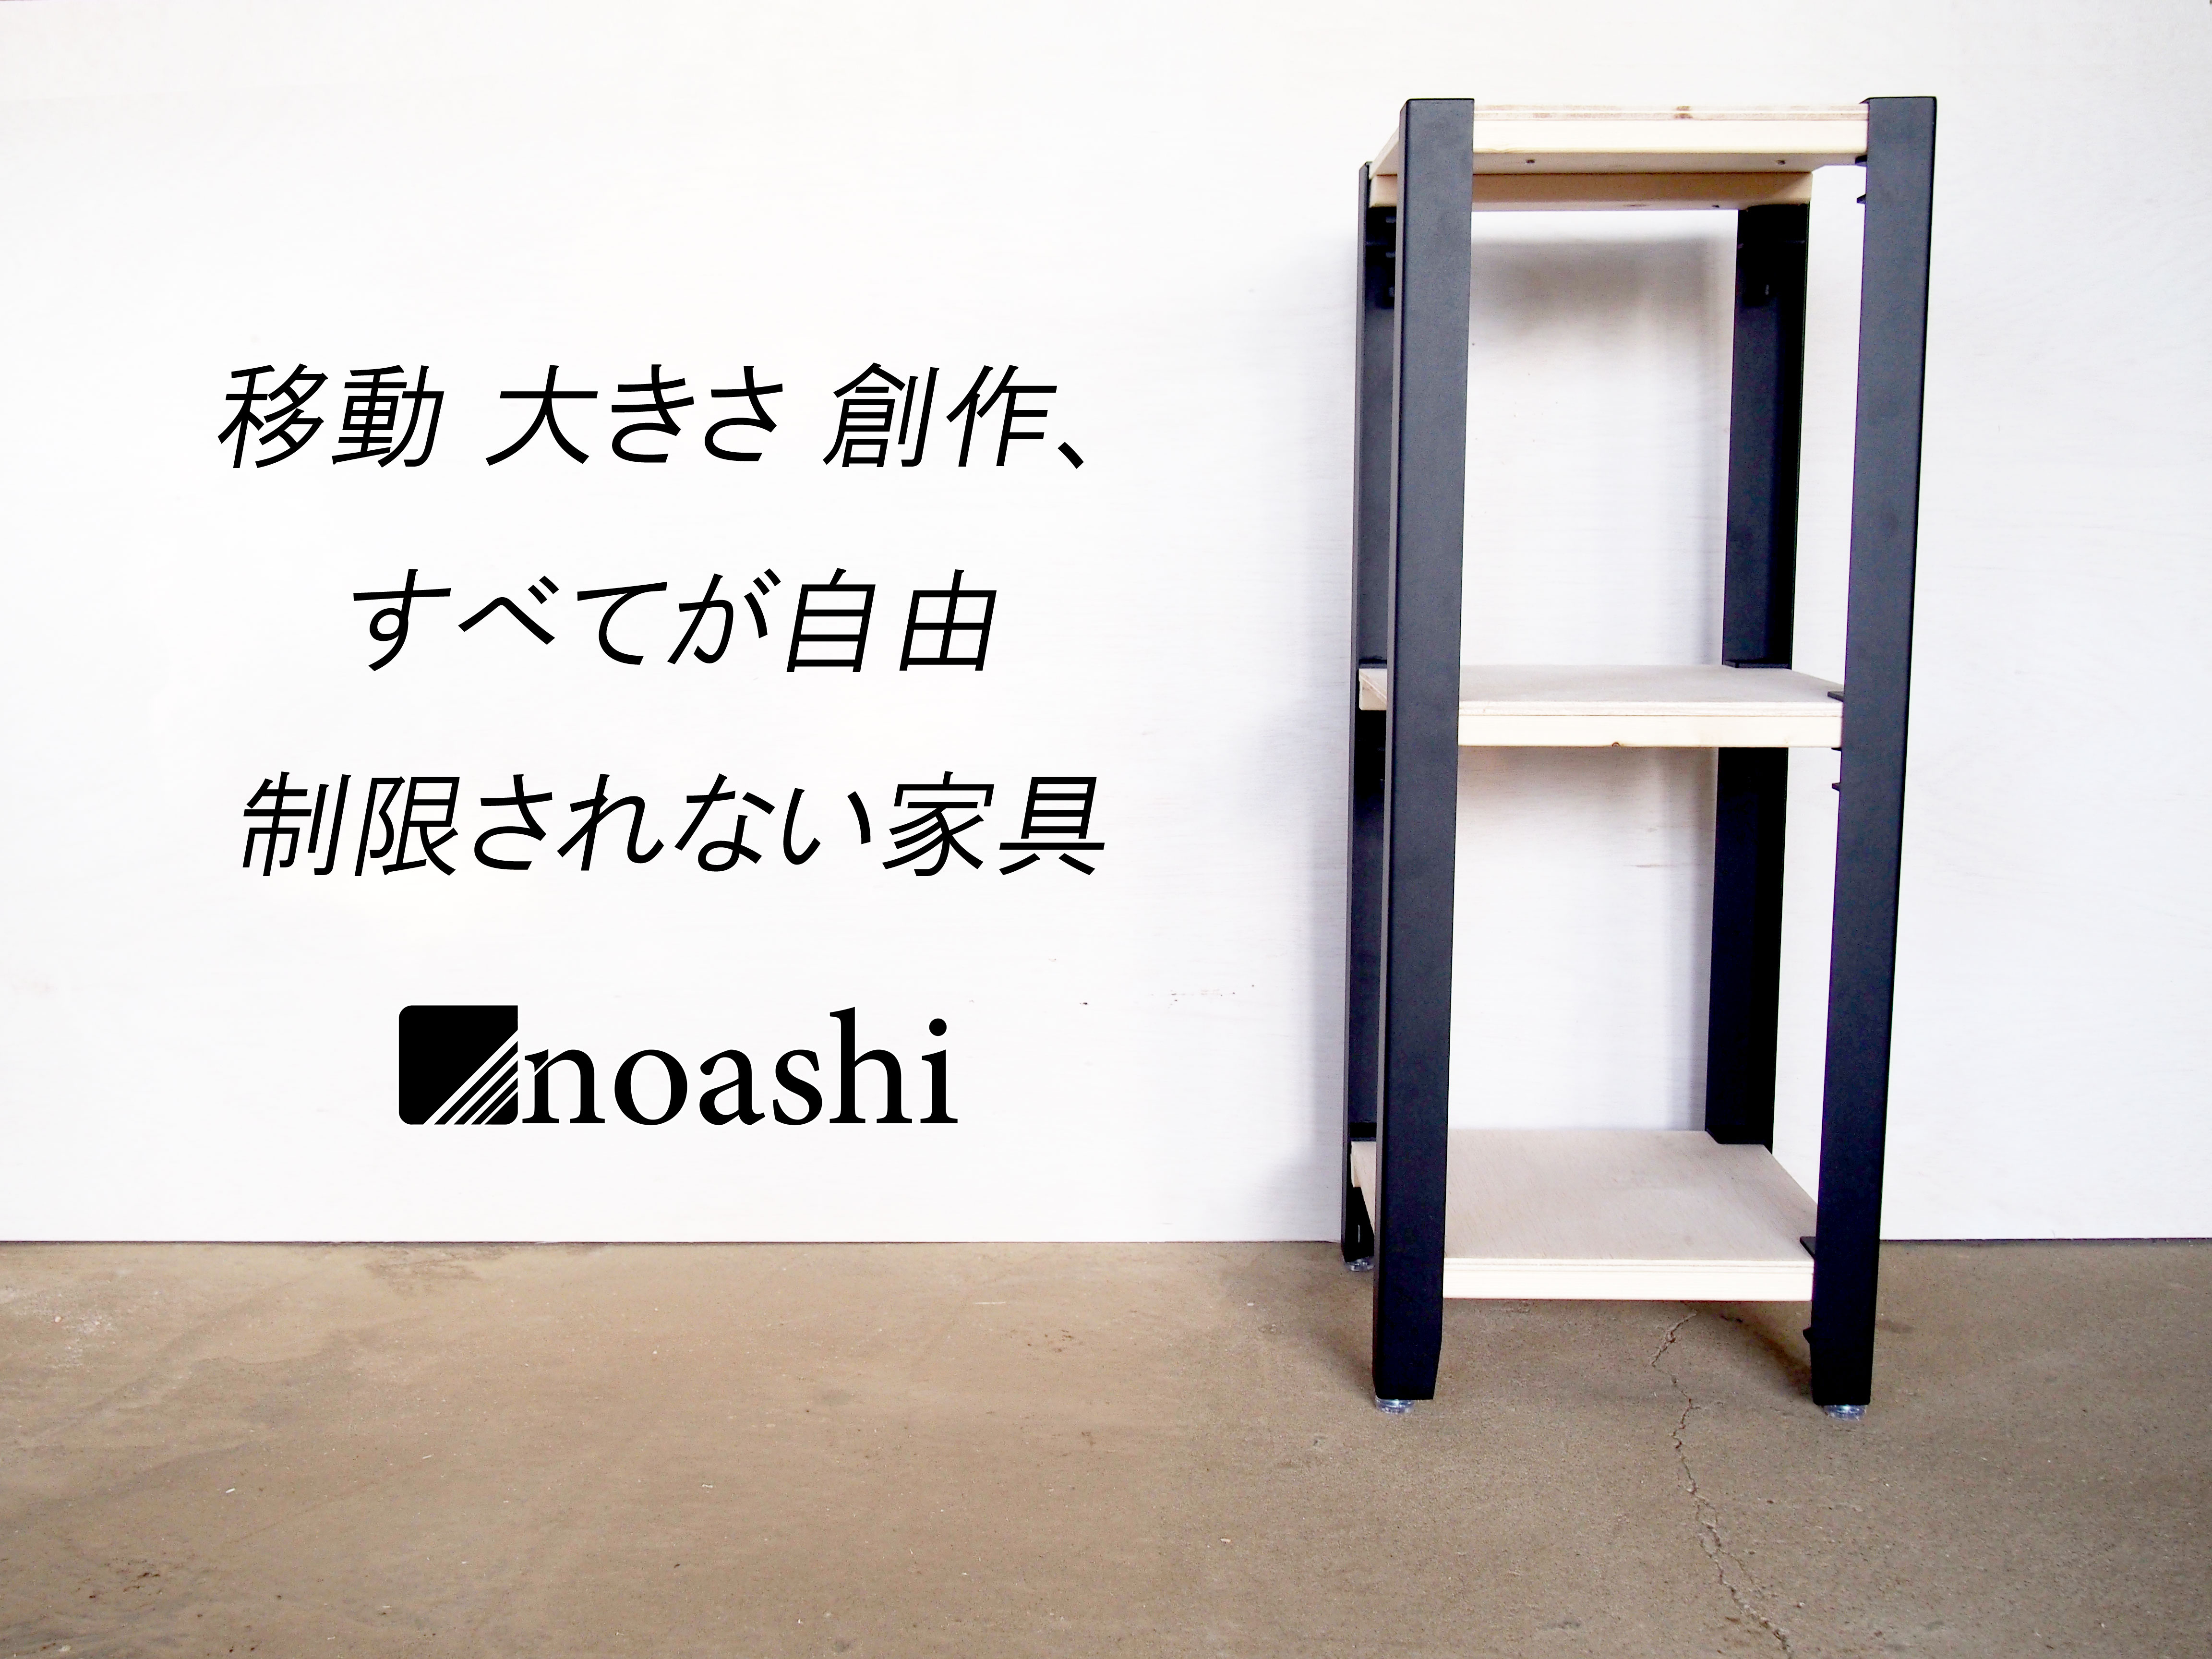 noashi ローテーブル用の脚 24w